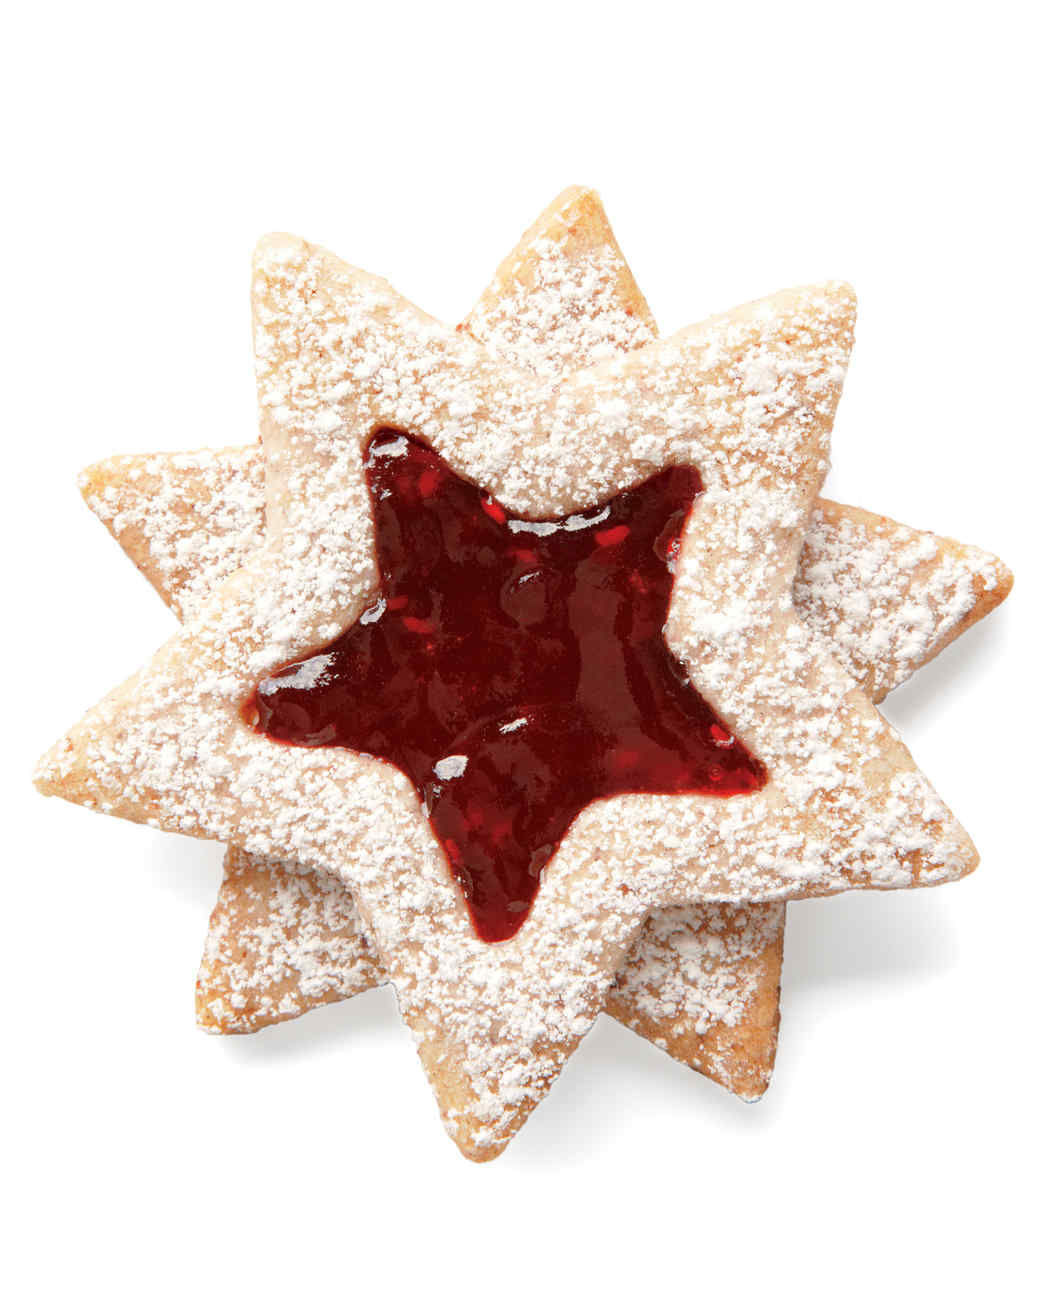 Traditional Christmas Cookie Recipes | Martha Stewart